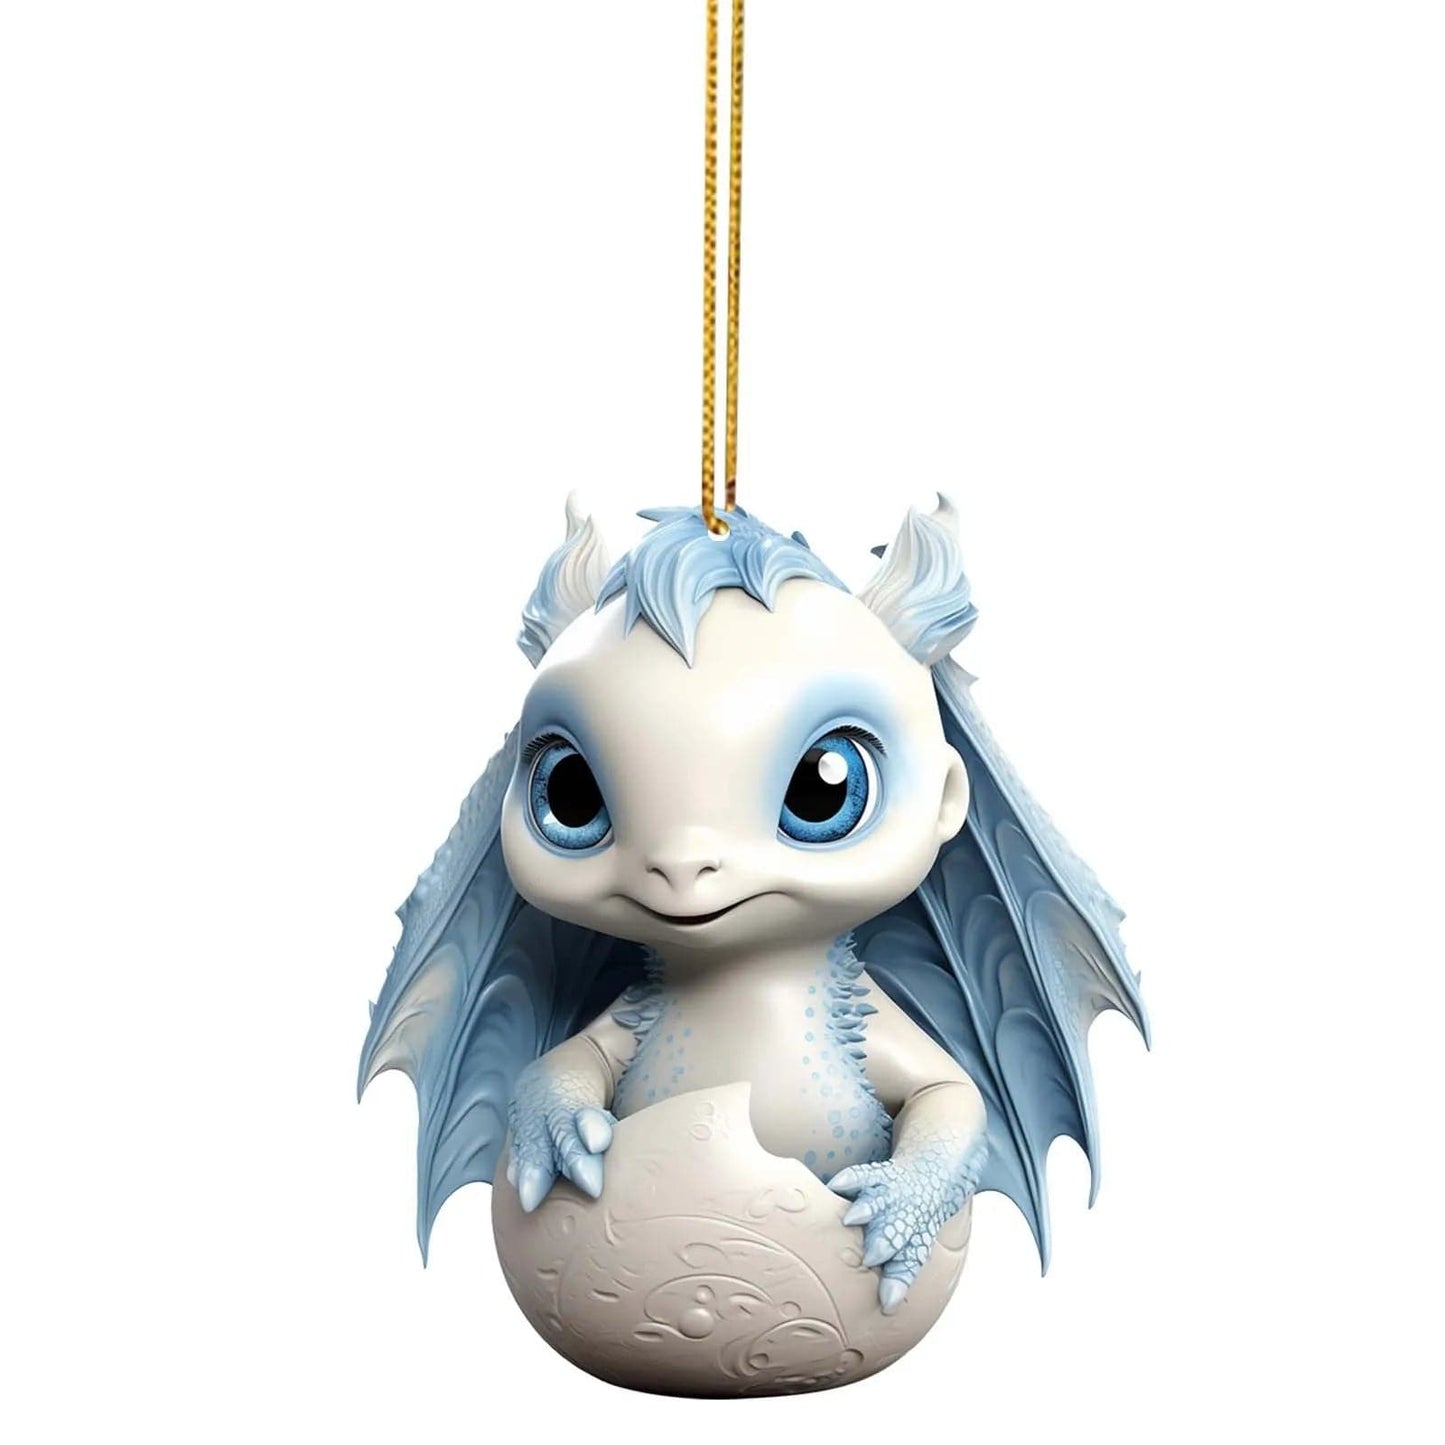 Cute Little Dragon Christmas Decorations Blue And White Porcelain Color Home Christmas Tree Ornament Pendant